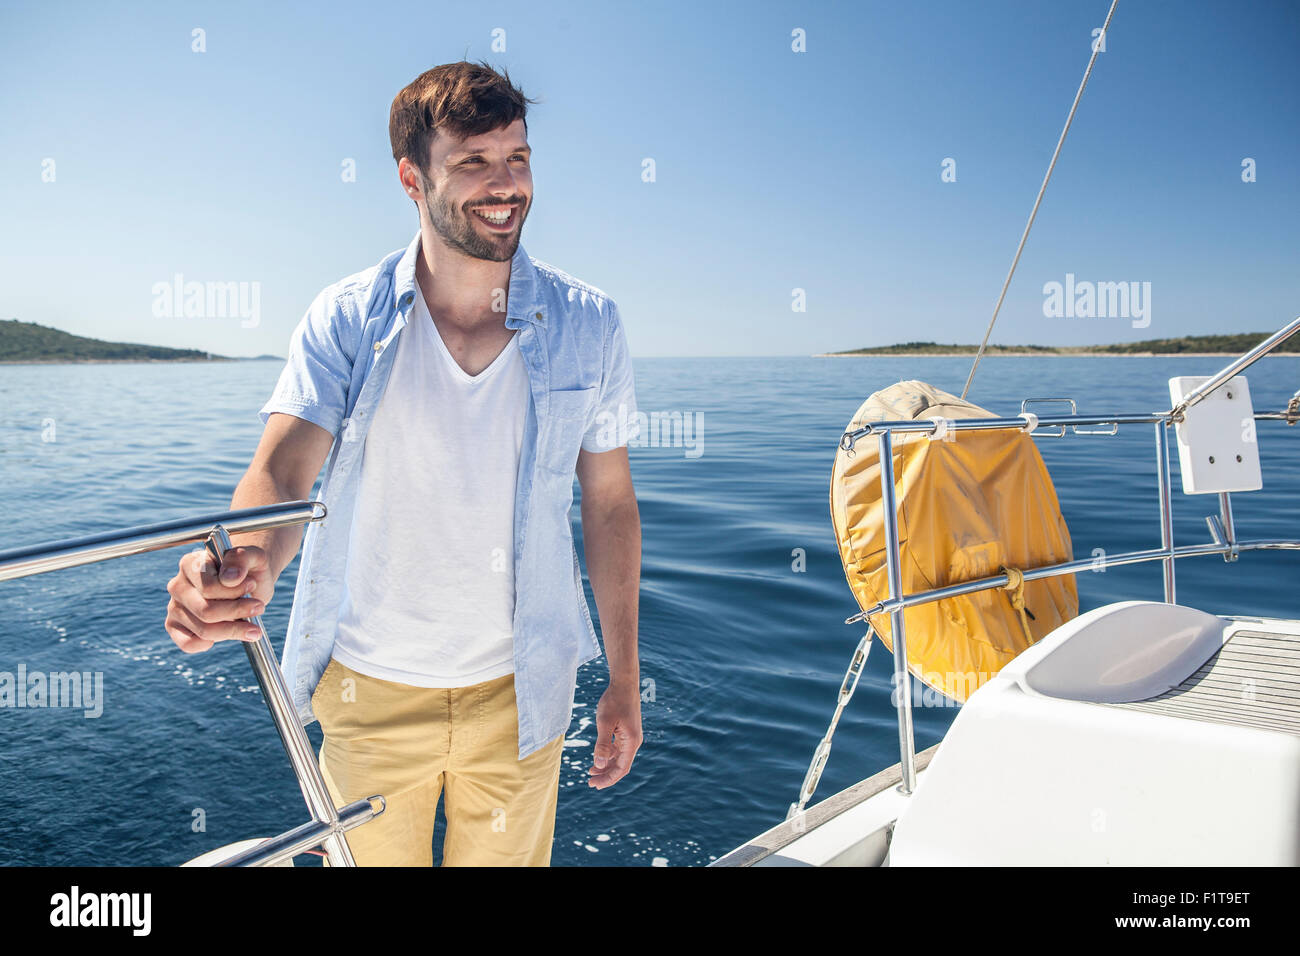 Man holding fast onto railing on sailboat, Adriatic Sea Stock Photo